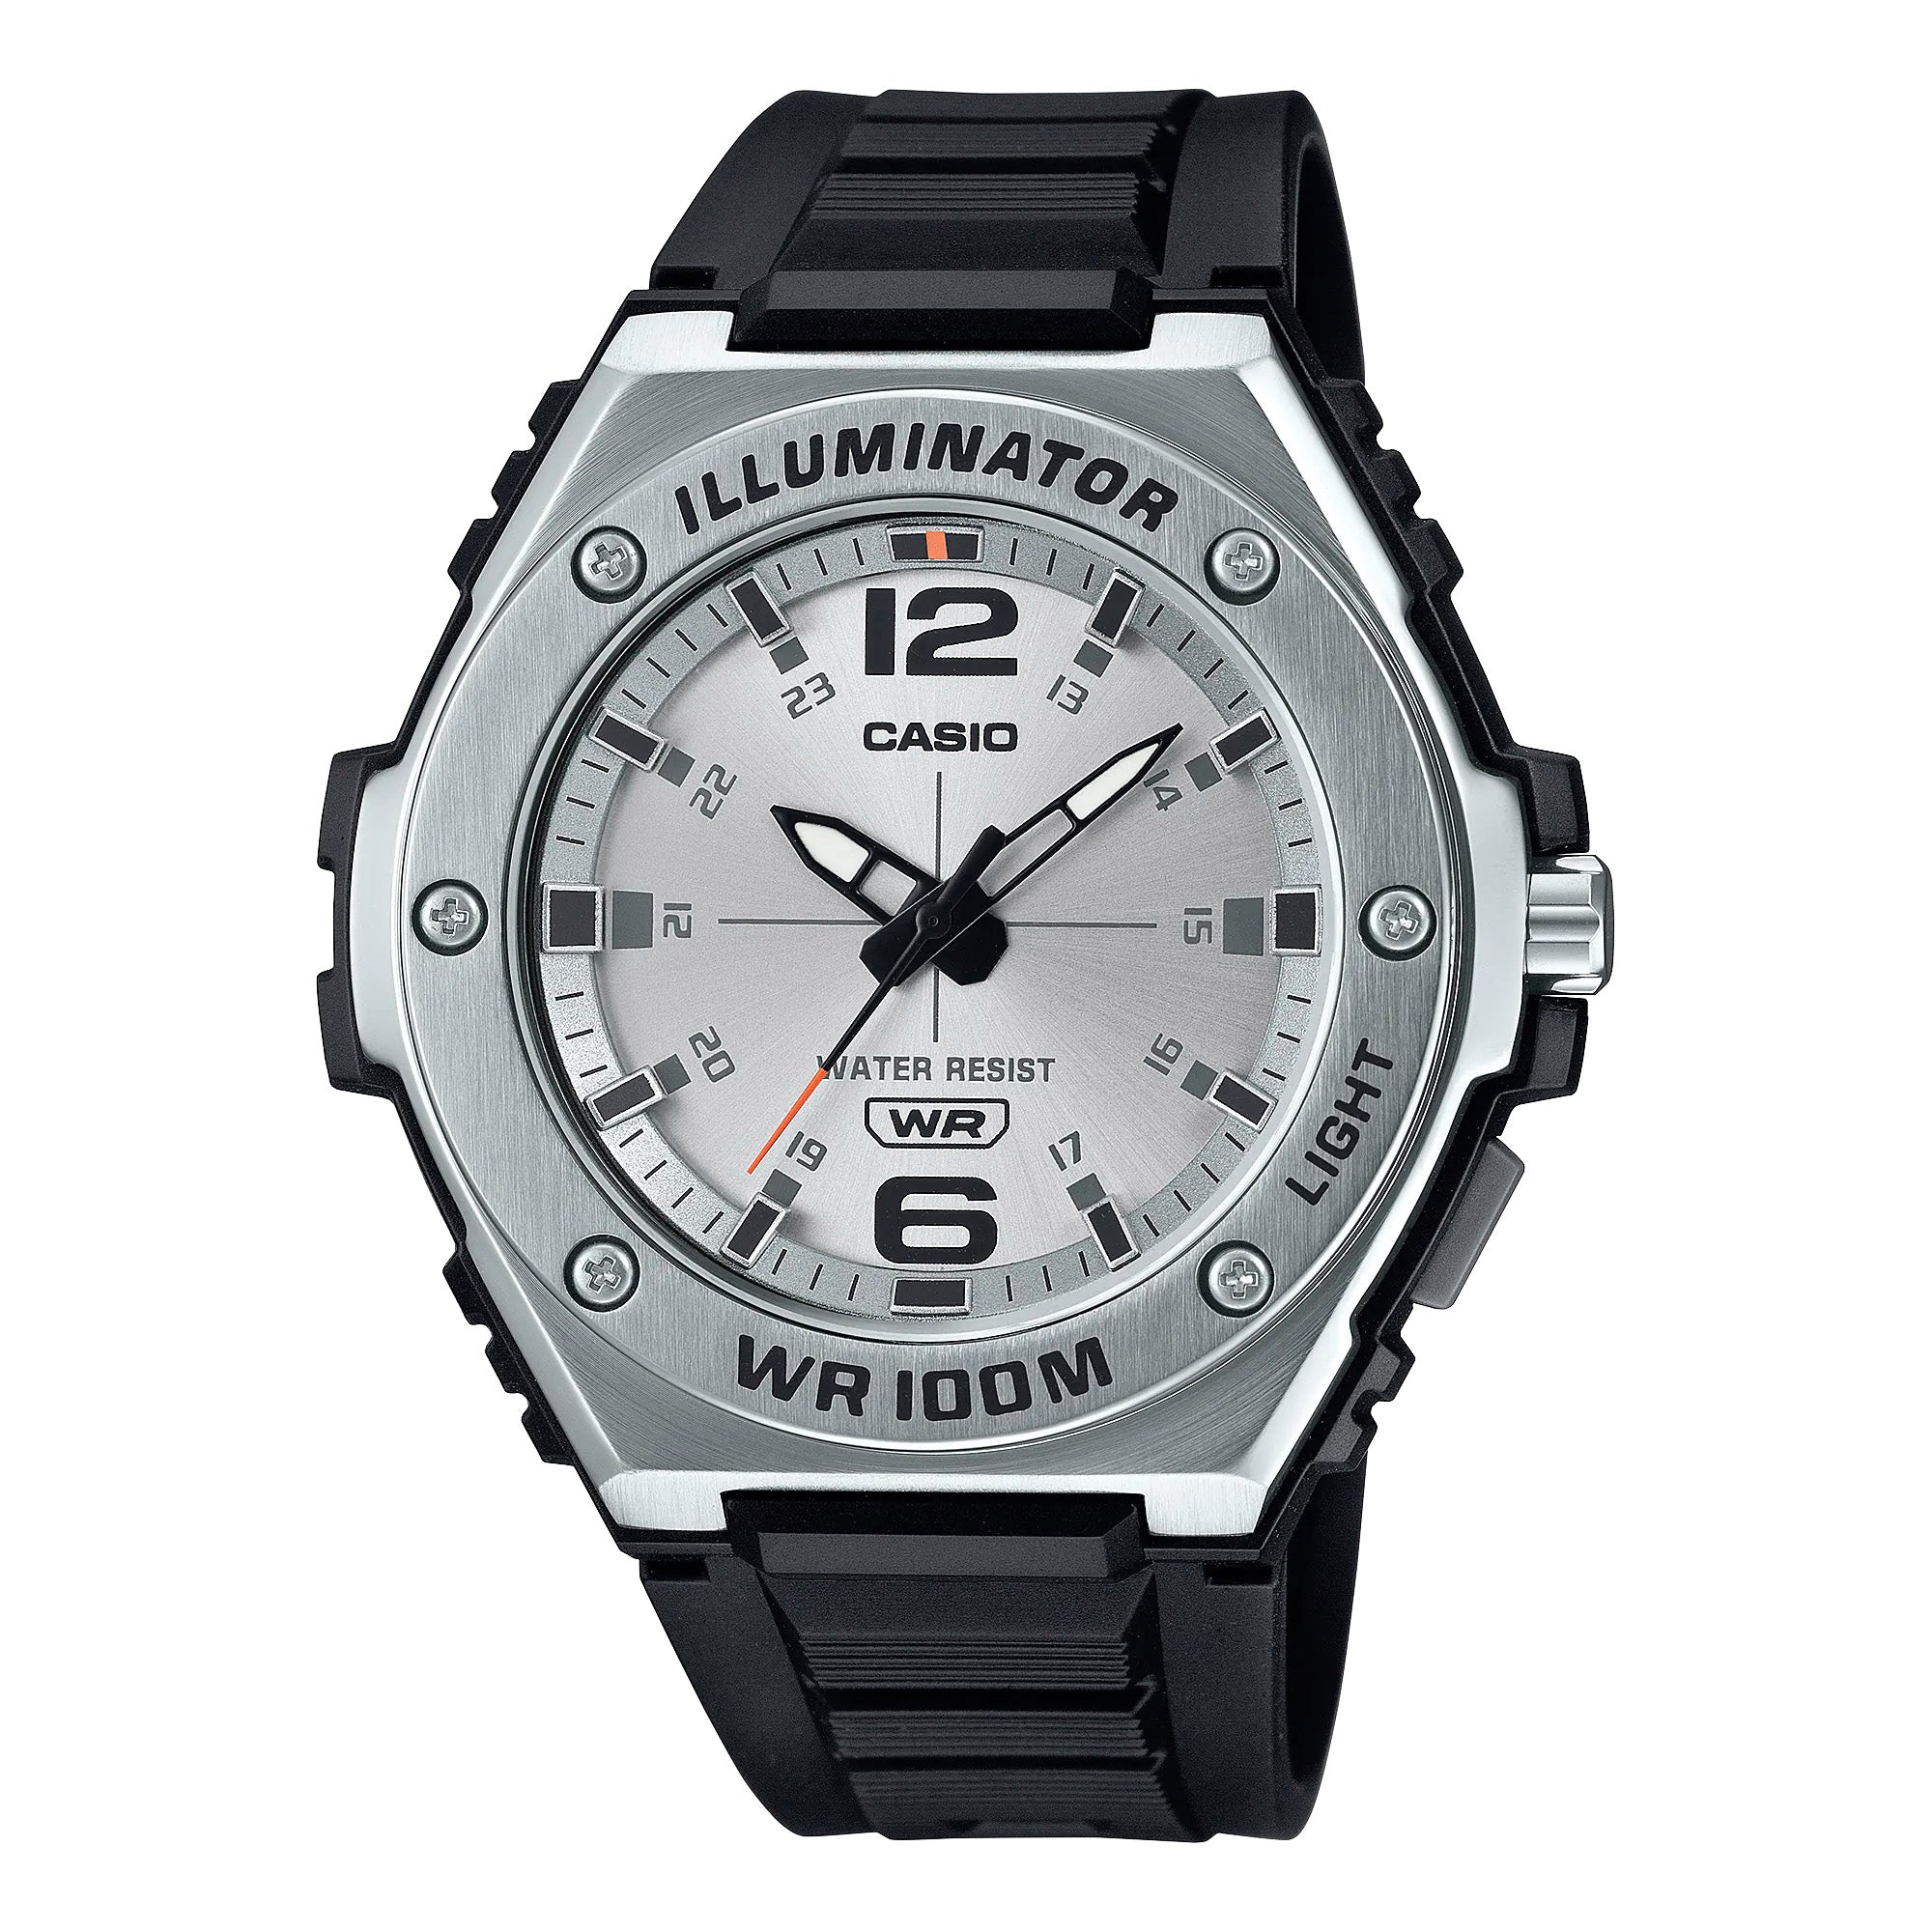 Casio Men's Watch Illuminator WR100M Silver MWA-100H-7AVDF